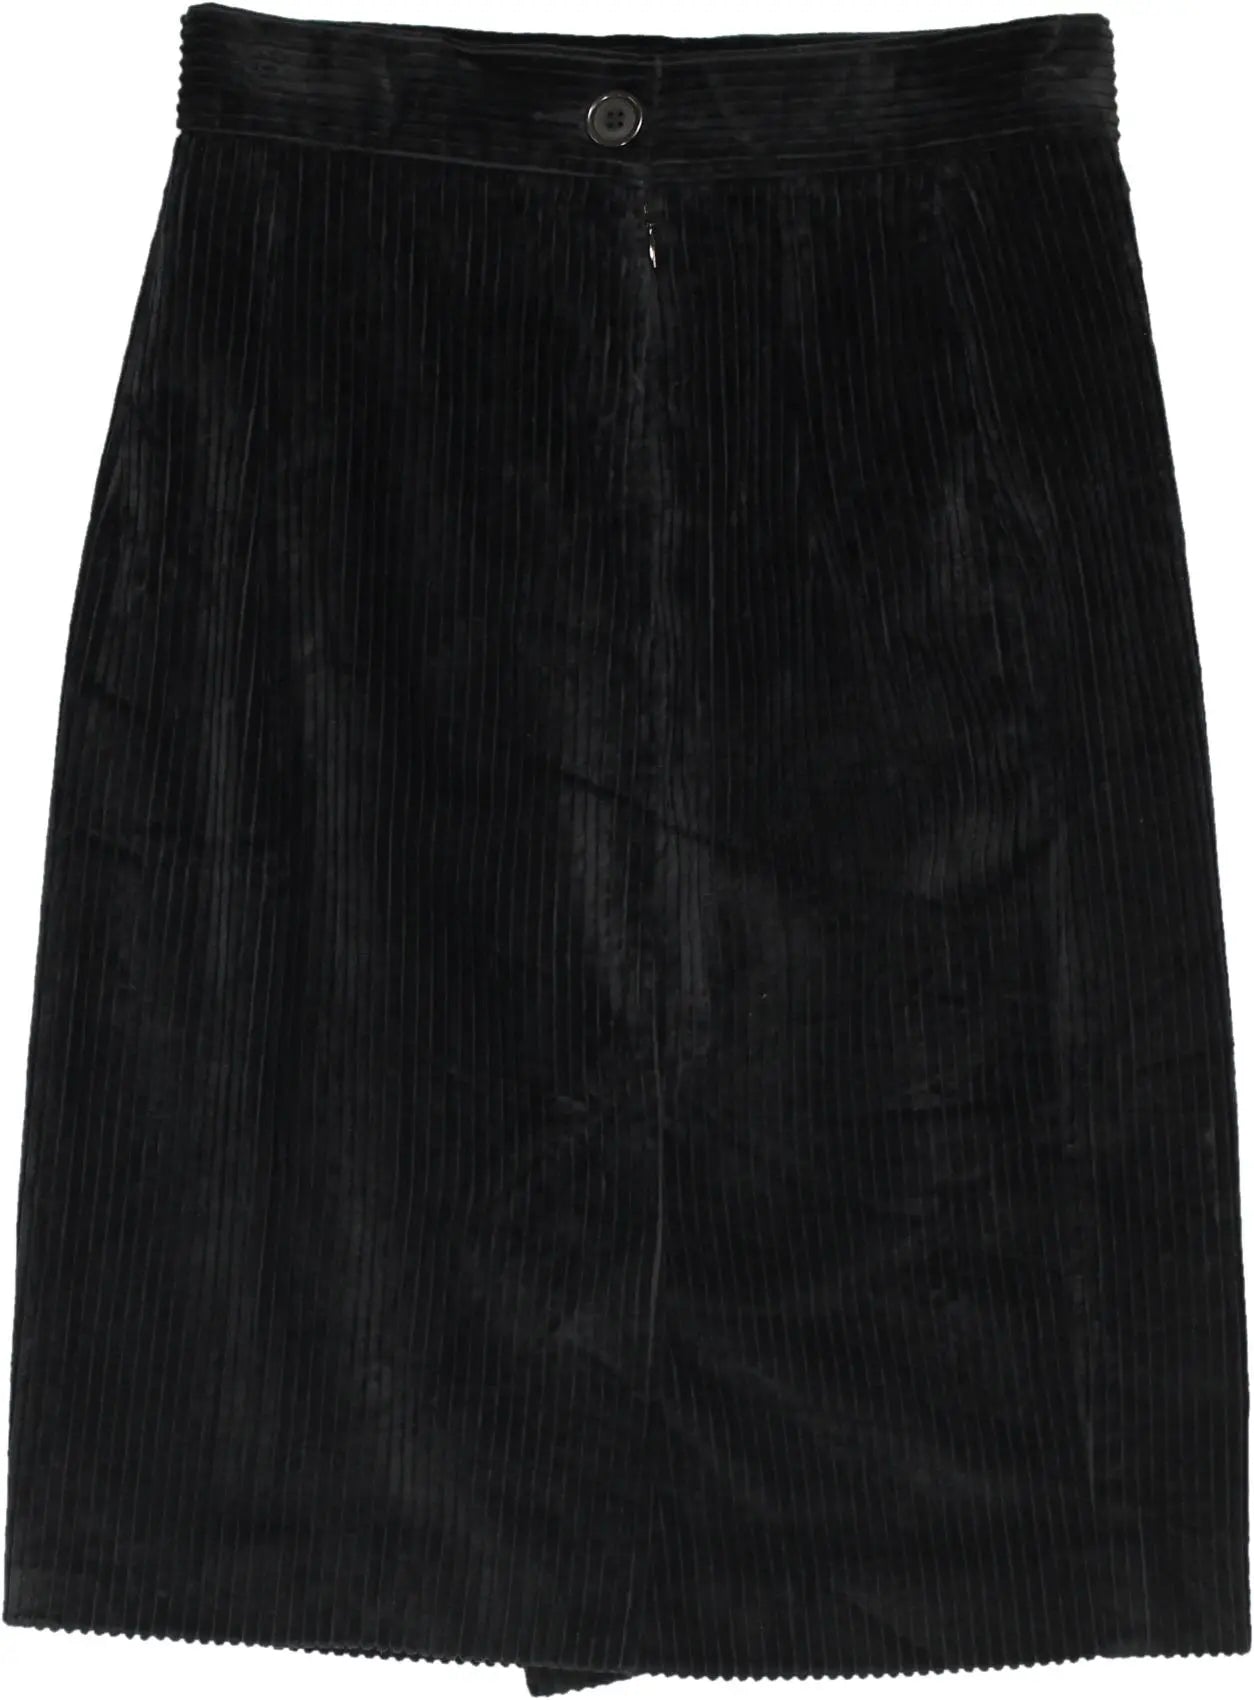 Popyloreni - Corduroy Skirt- ThriftTale.com - Vintage and second handclothing